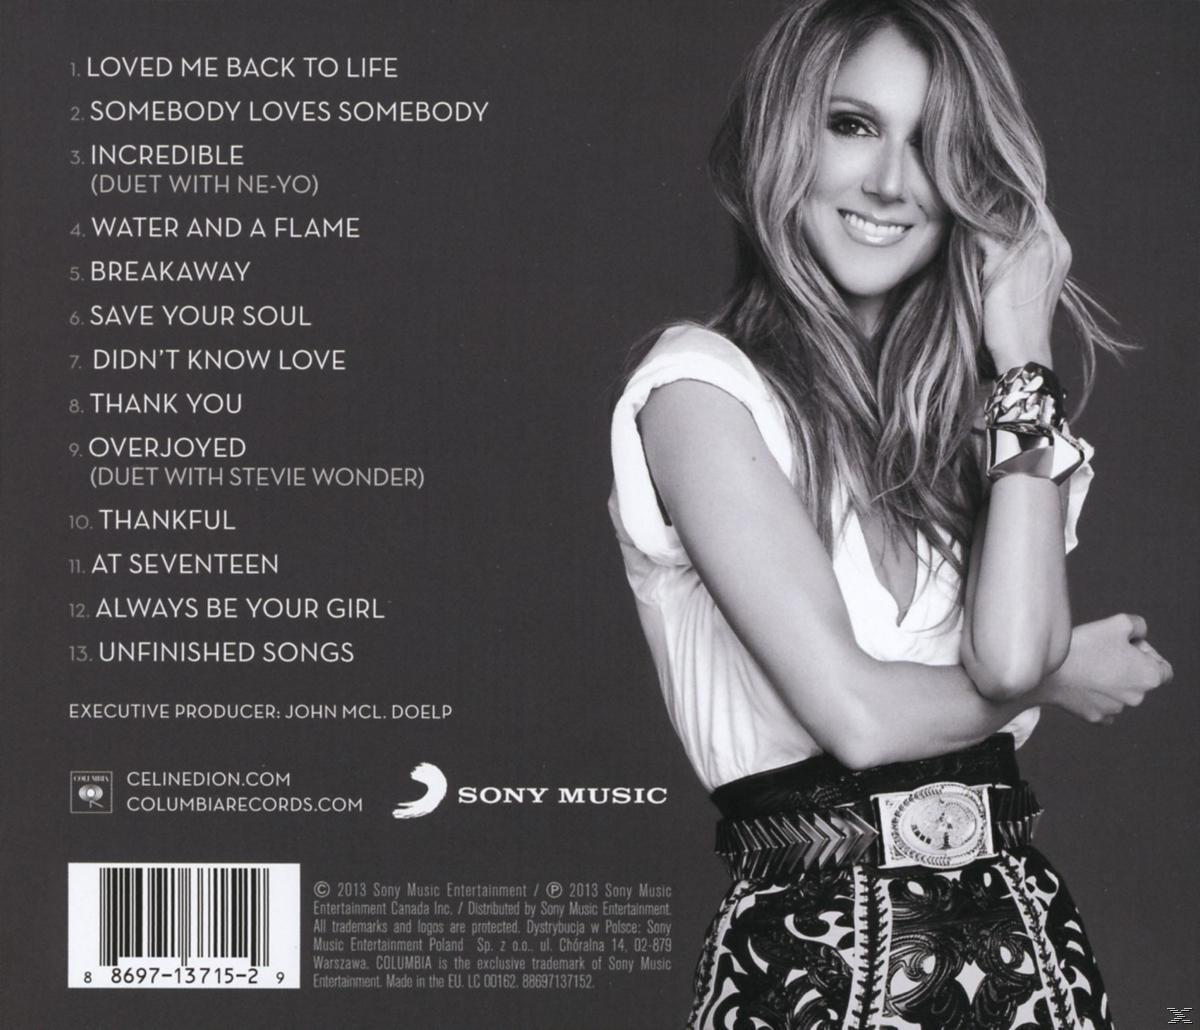 Céline Dion - Loved Me (CD) - Back Life To